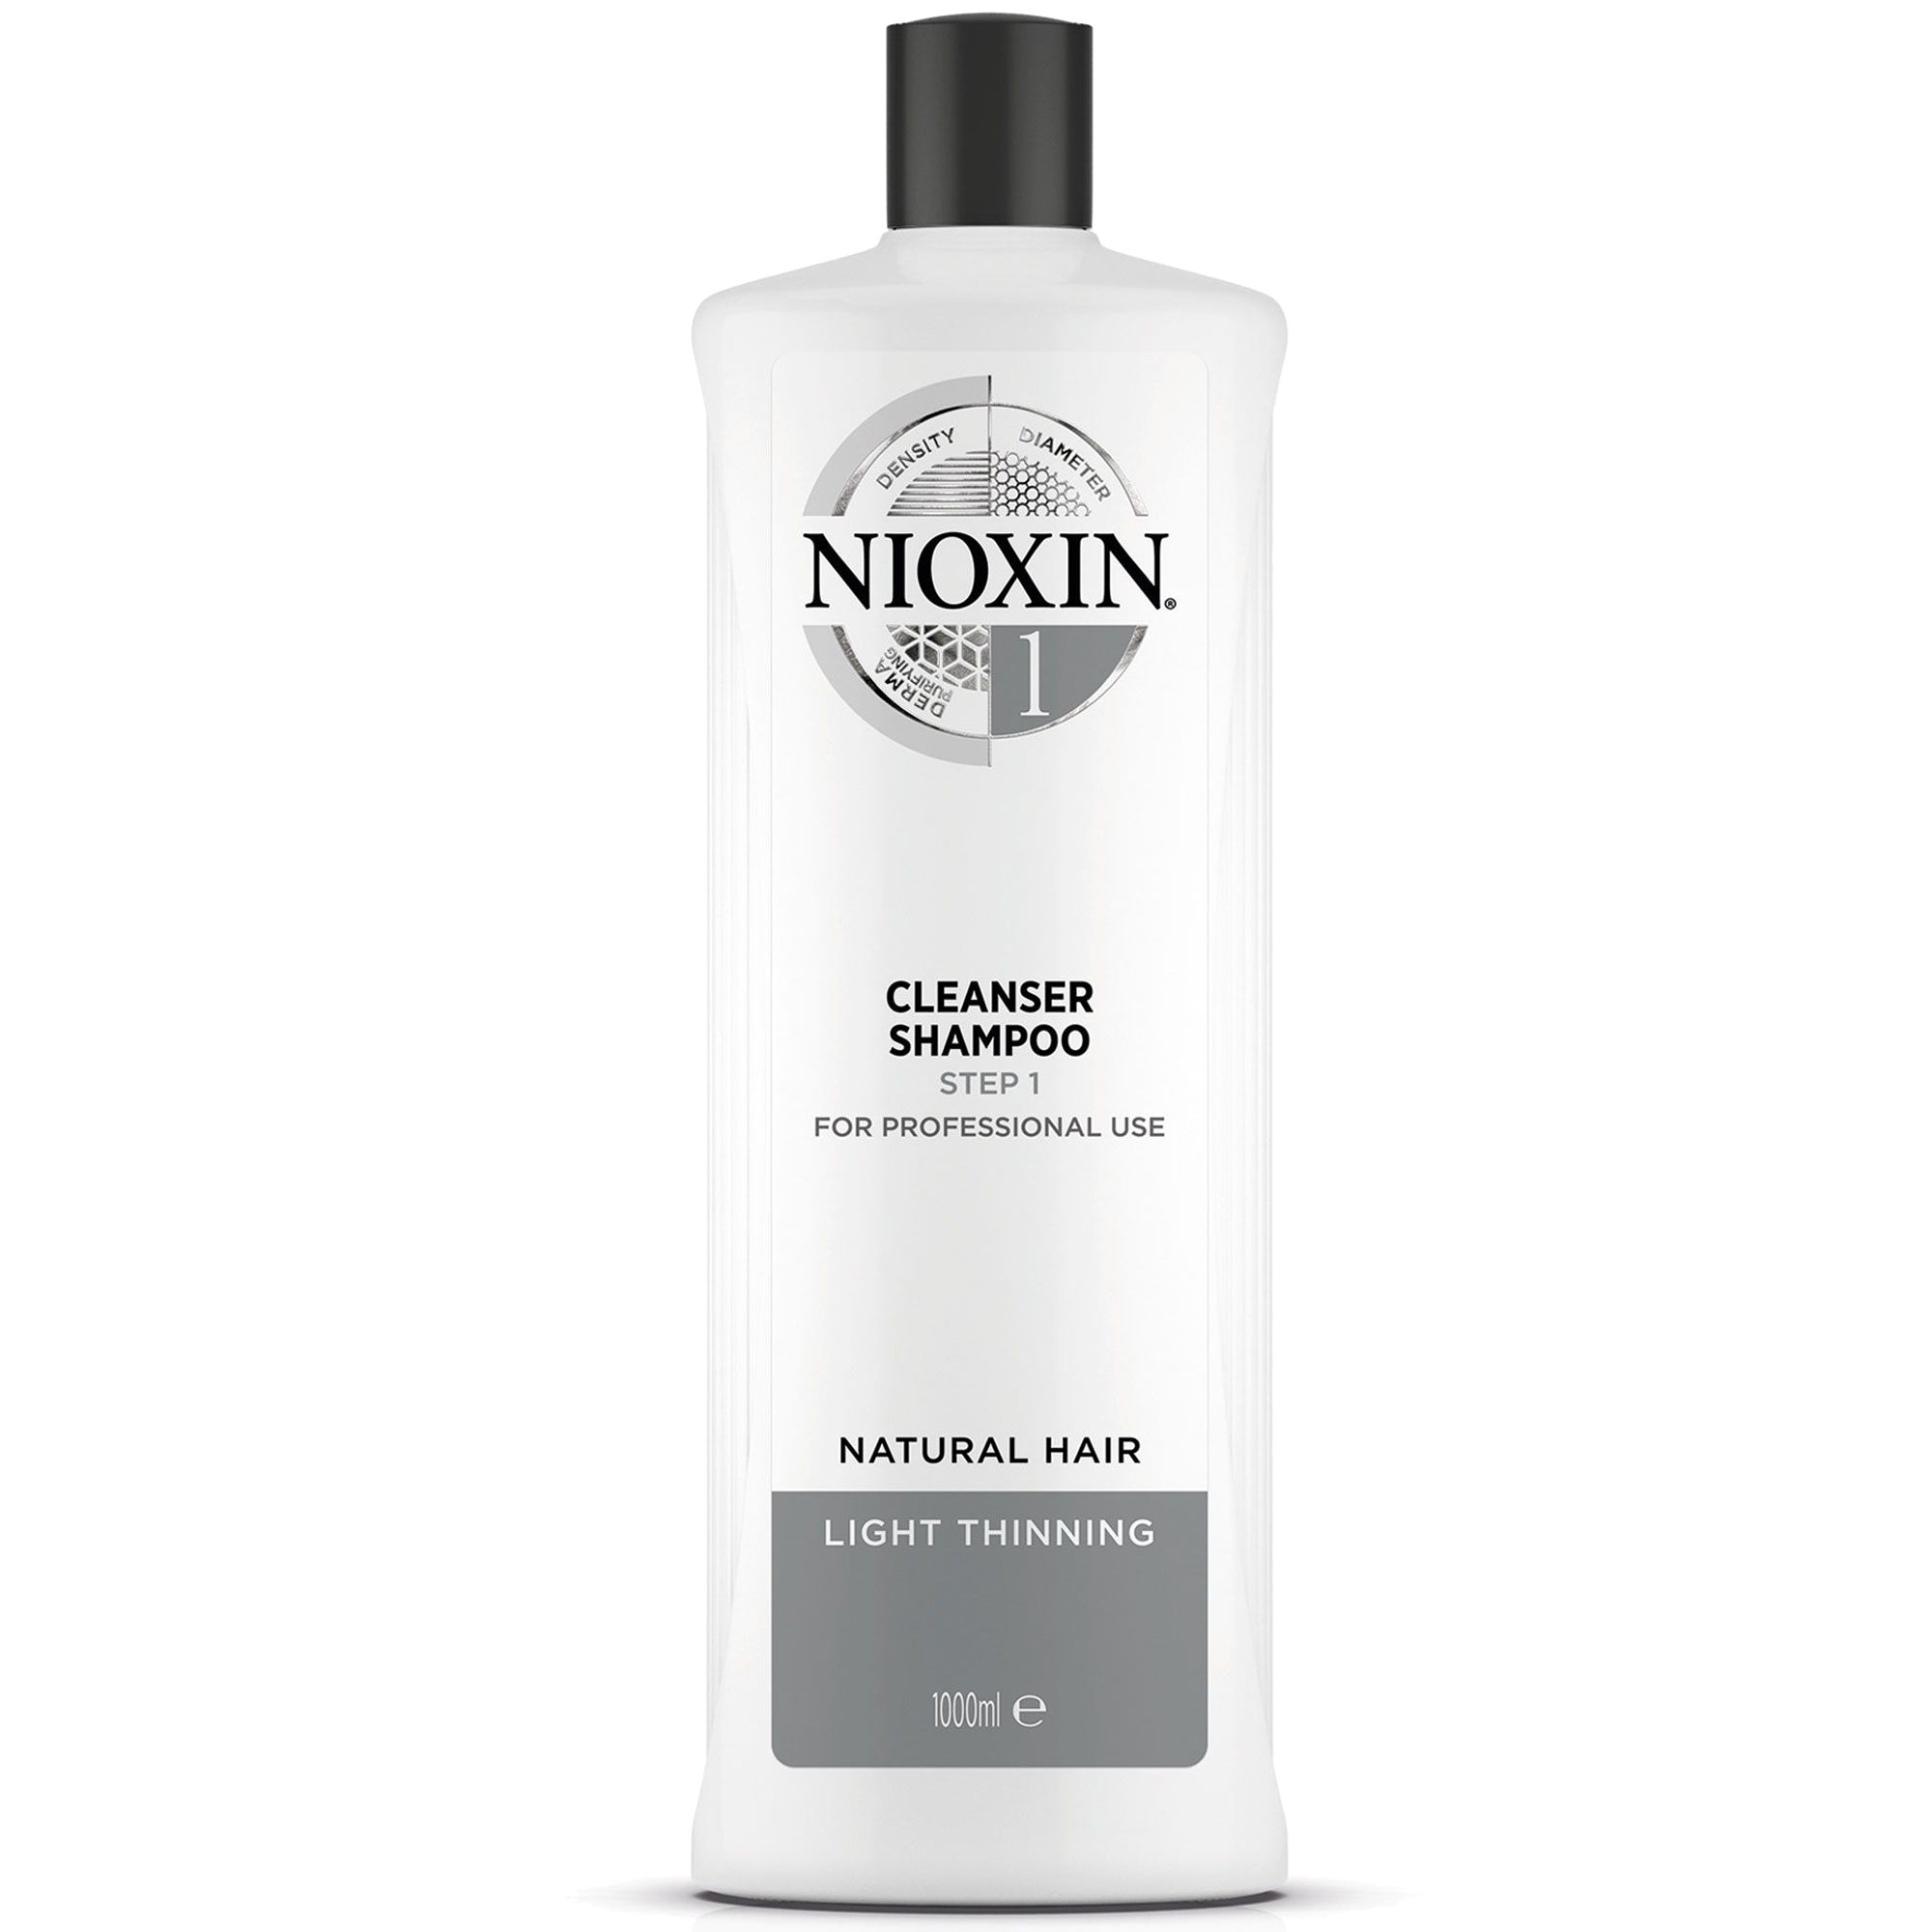 Купить шампунь shampoo. Nioxin шампунь система4 1000 мл. Nioxin шампунь System 3 Cleanser Step 1. Nioxin очищающий шампунь (система 3) 300мл. Nioxin шампунь System 1 Cleanser Step 1, 1000 мл.